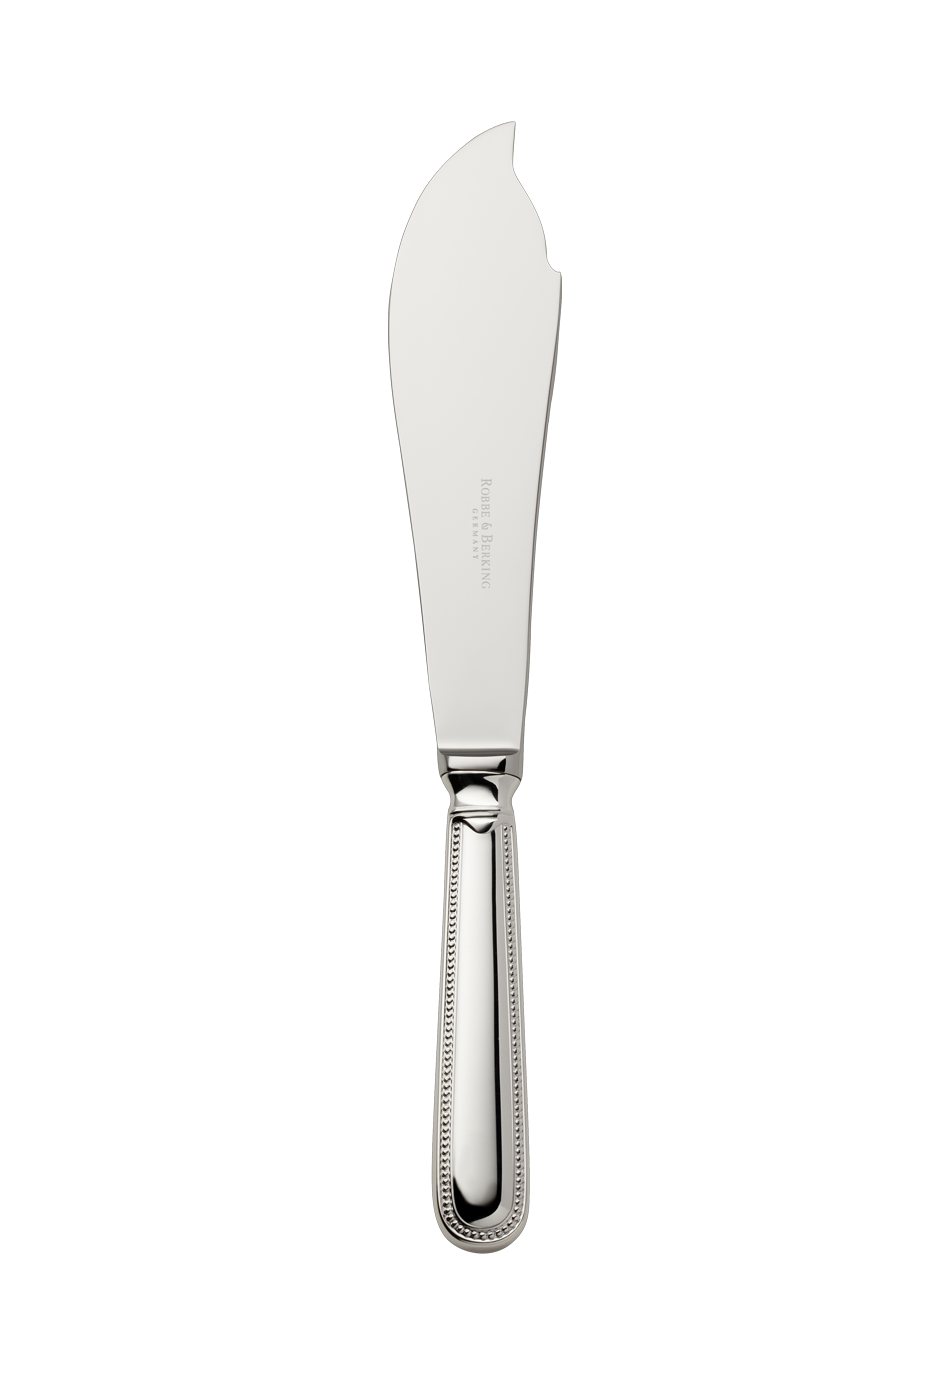 Franz. Perl Tart Knife (150g massive silverplated)